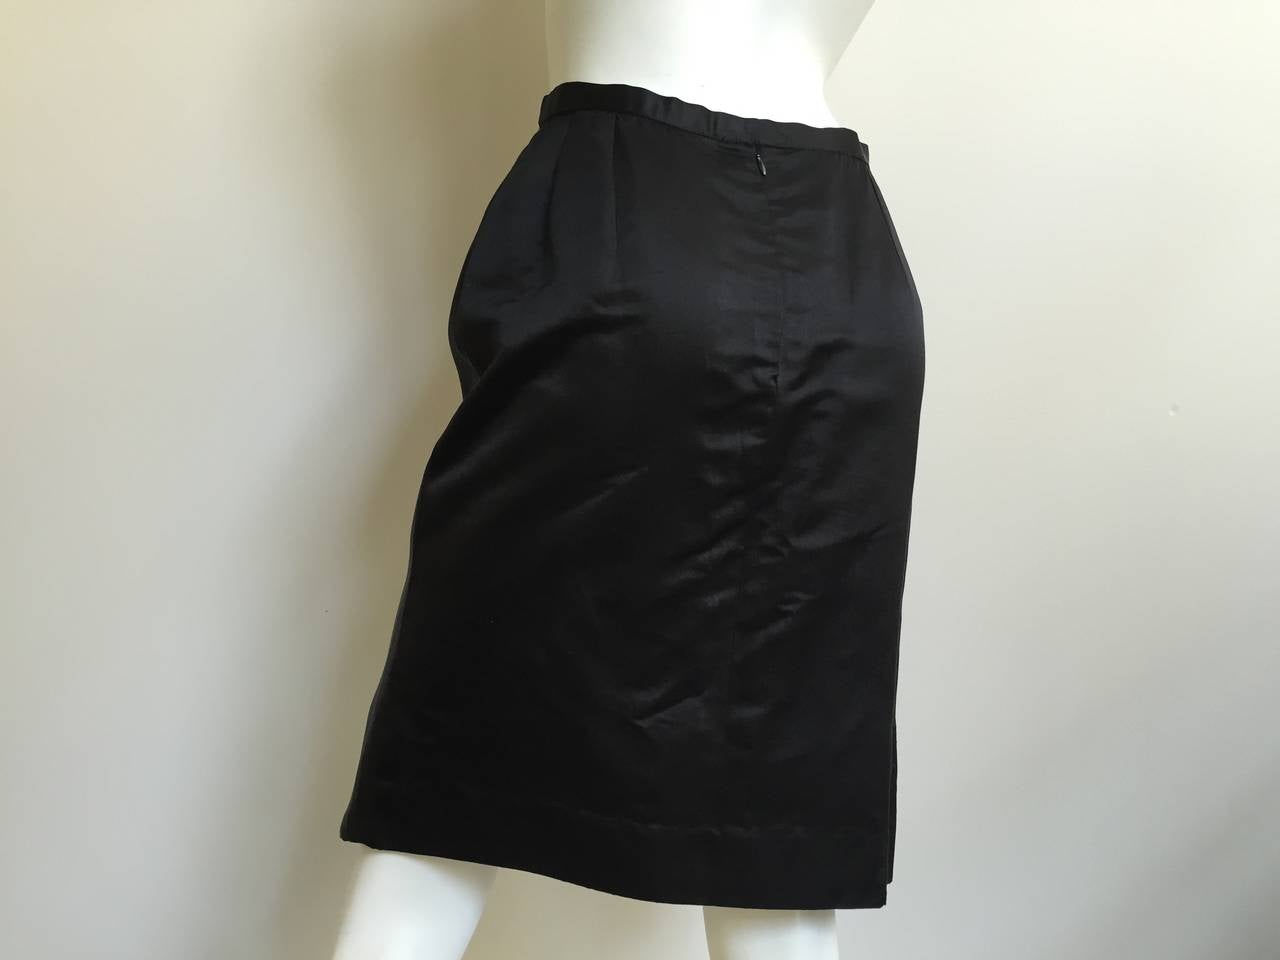 Bill Blass 70s Evening Skirt Size 6. For Sale at 1stdibs